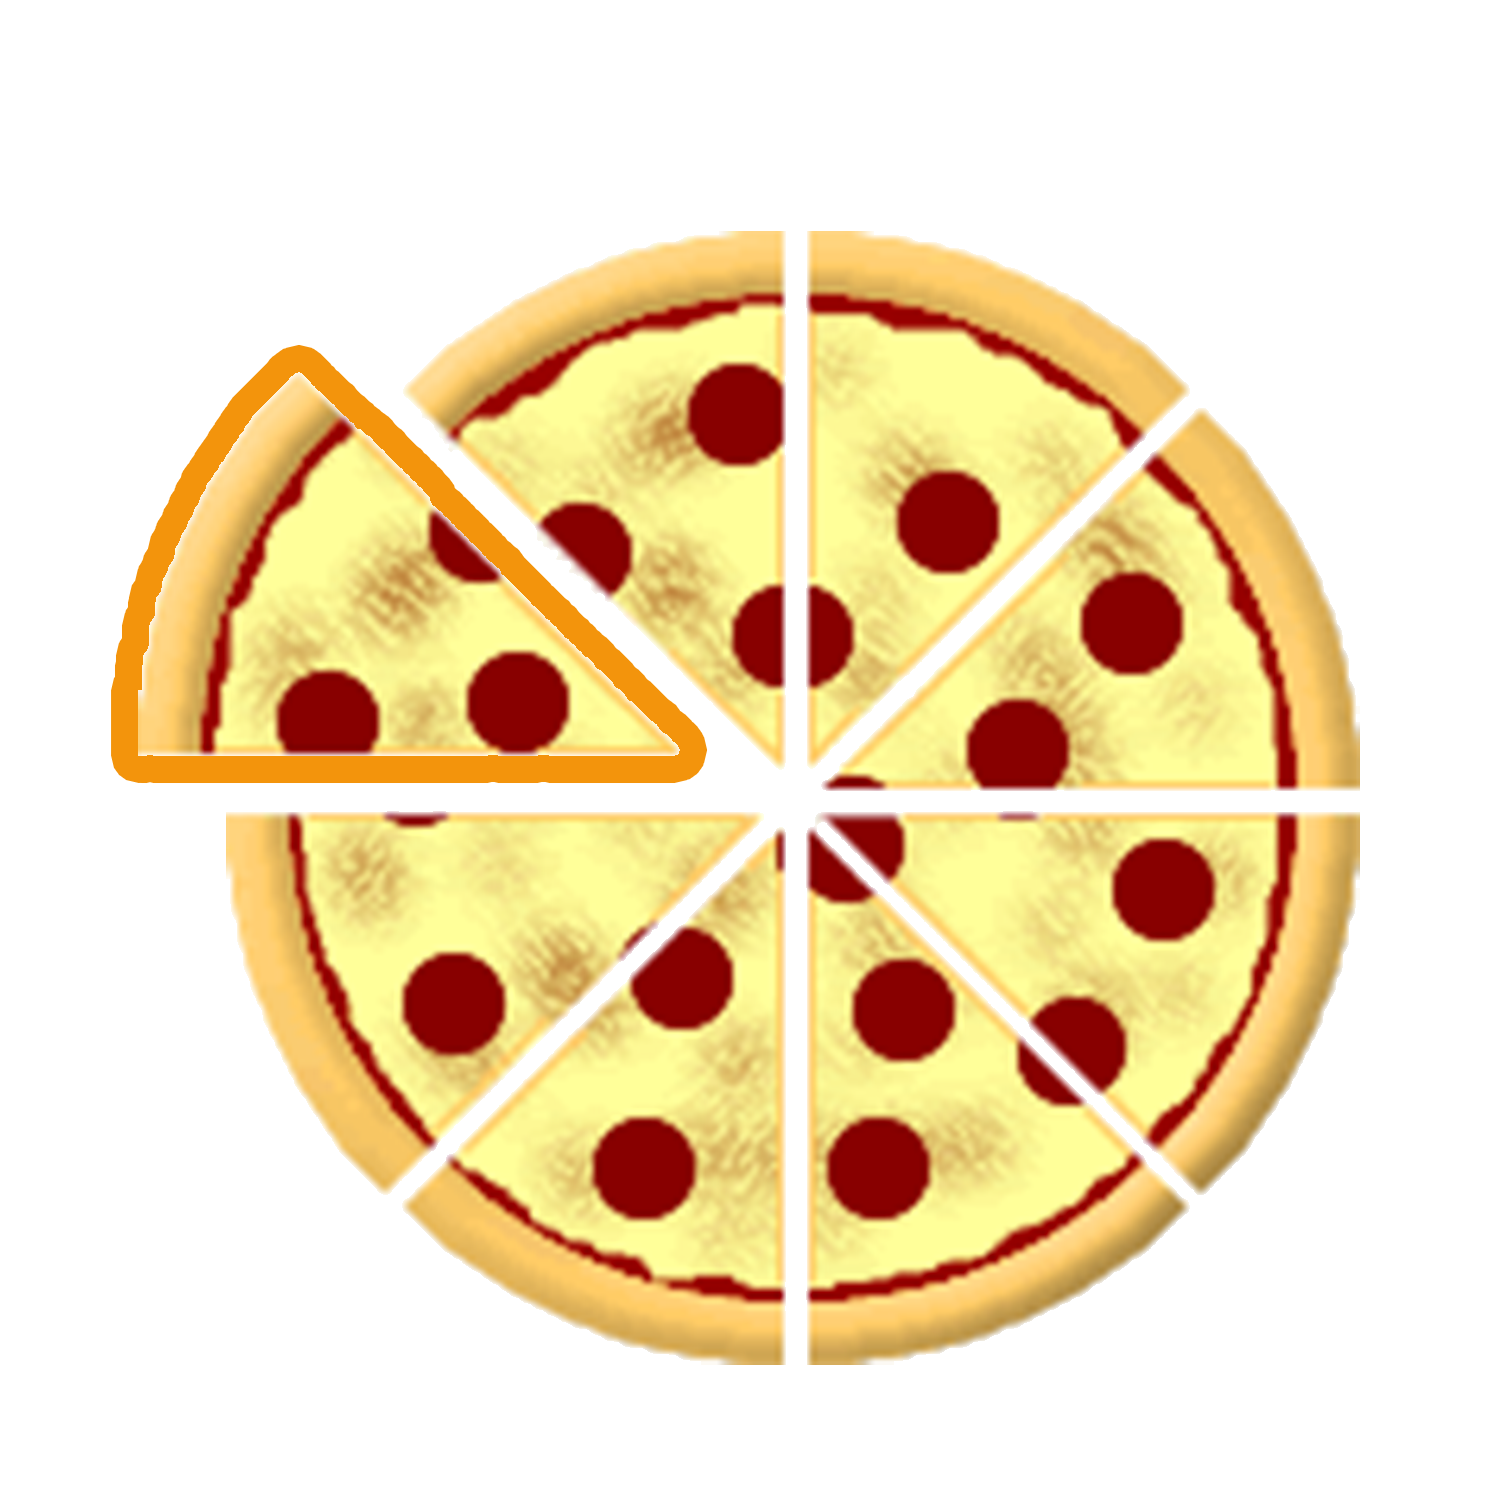 Fun fractions photo credit. Fraction clipart half eaten pizza